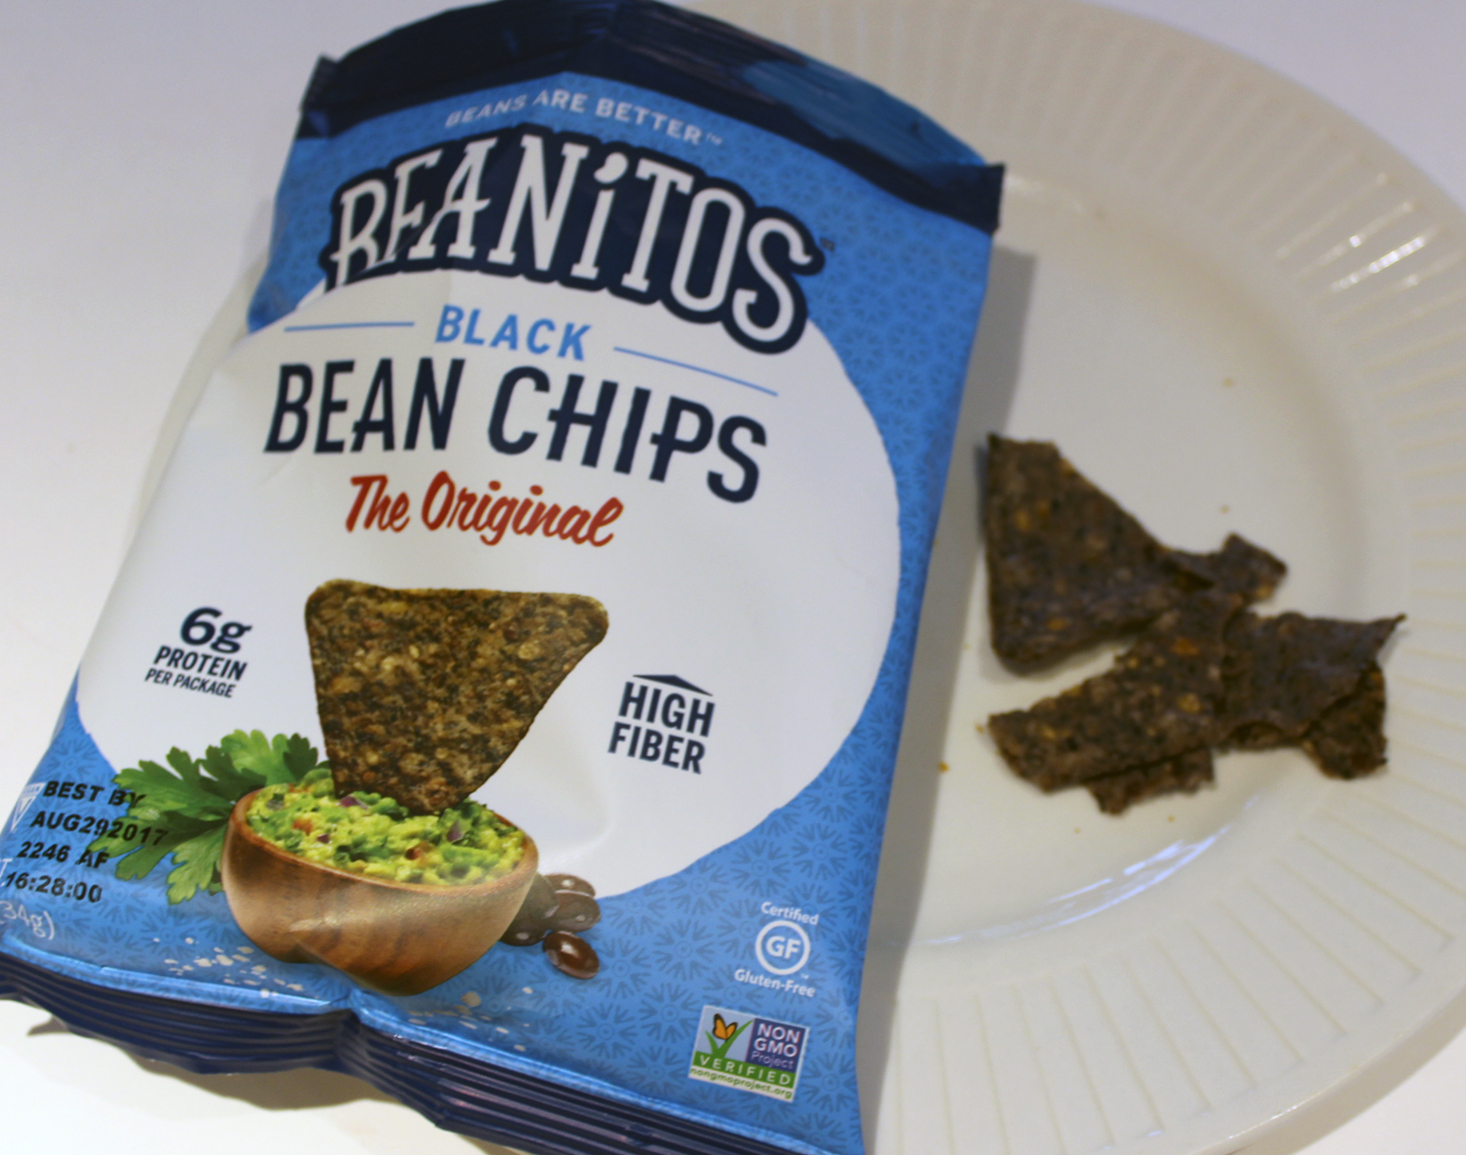 vegan-cuts-snack-january-2017-beanitos1